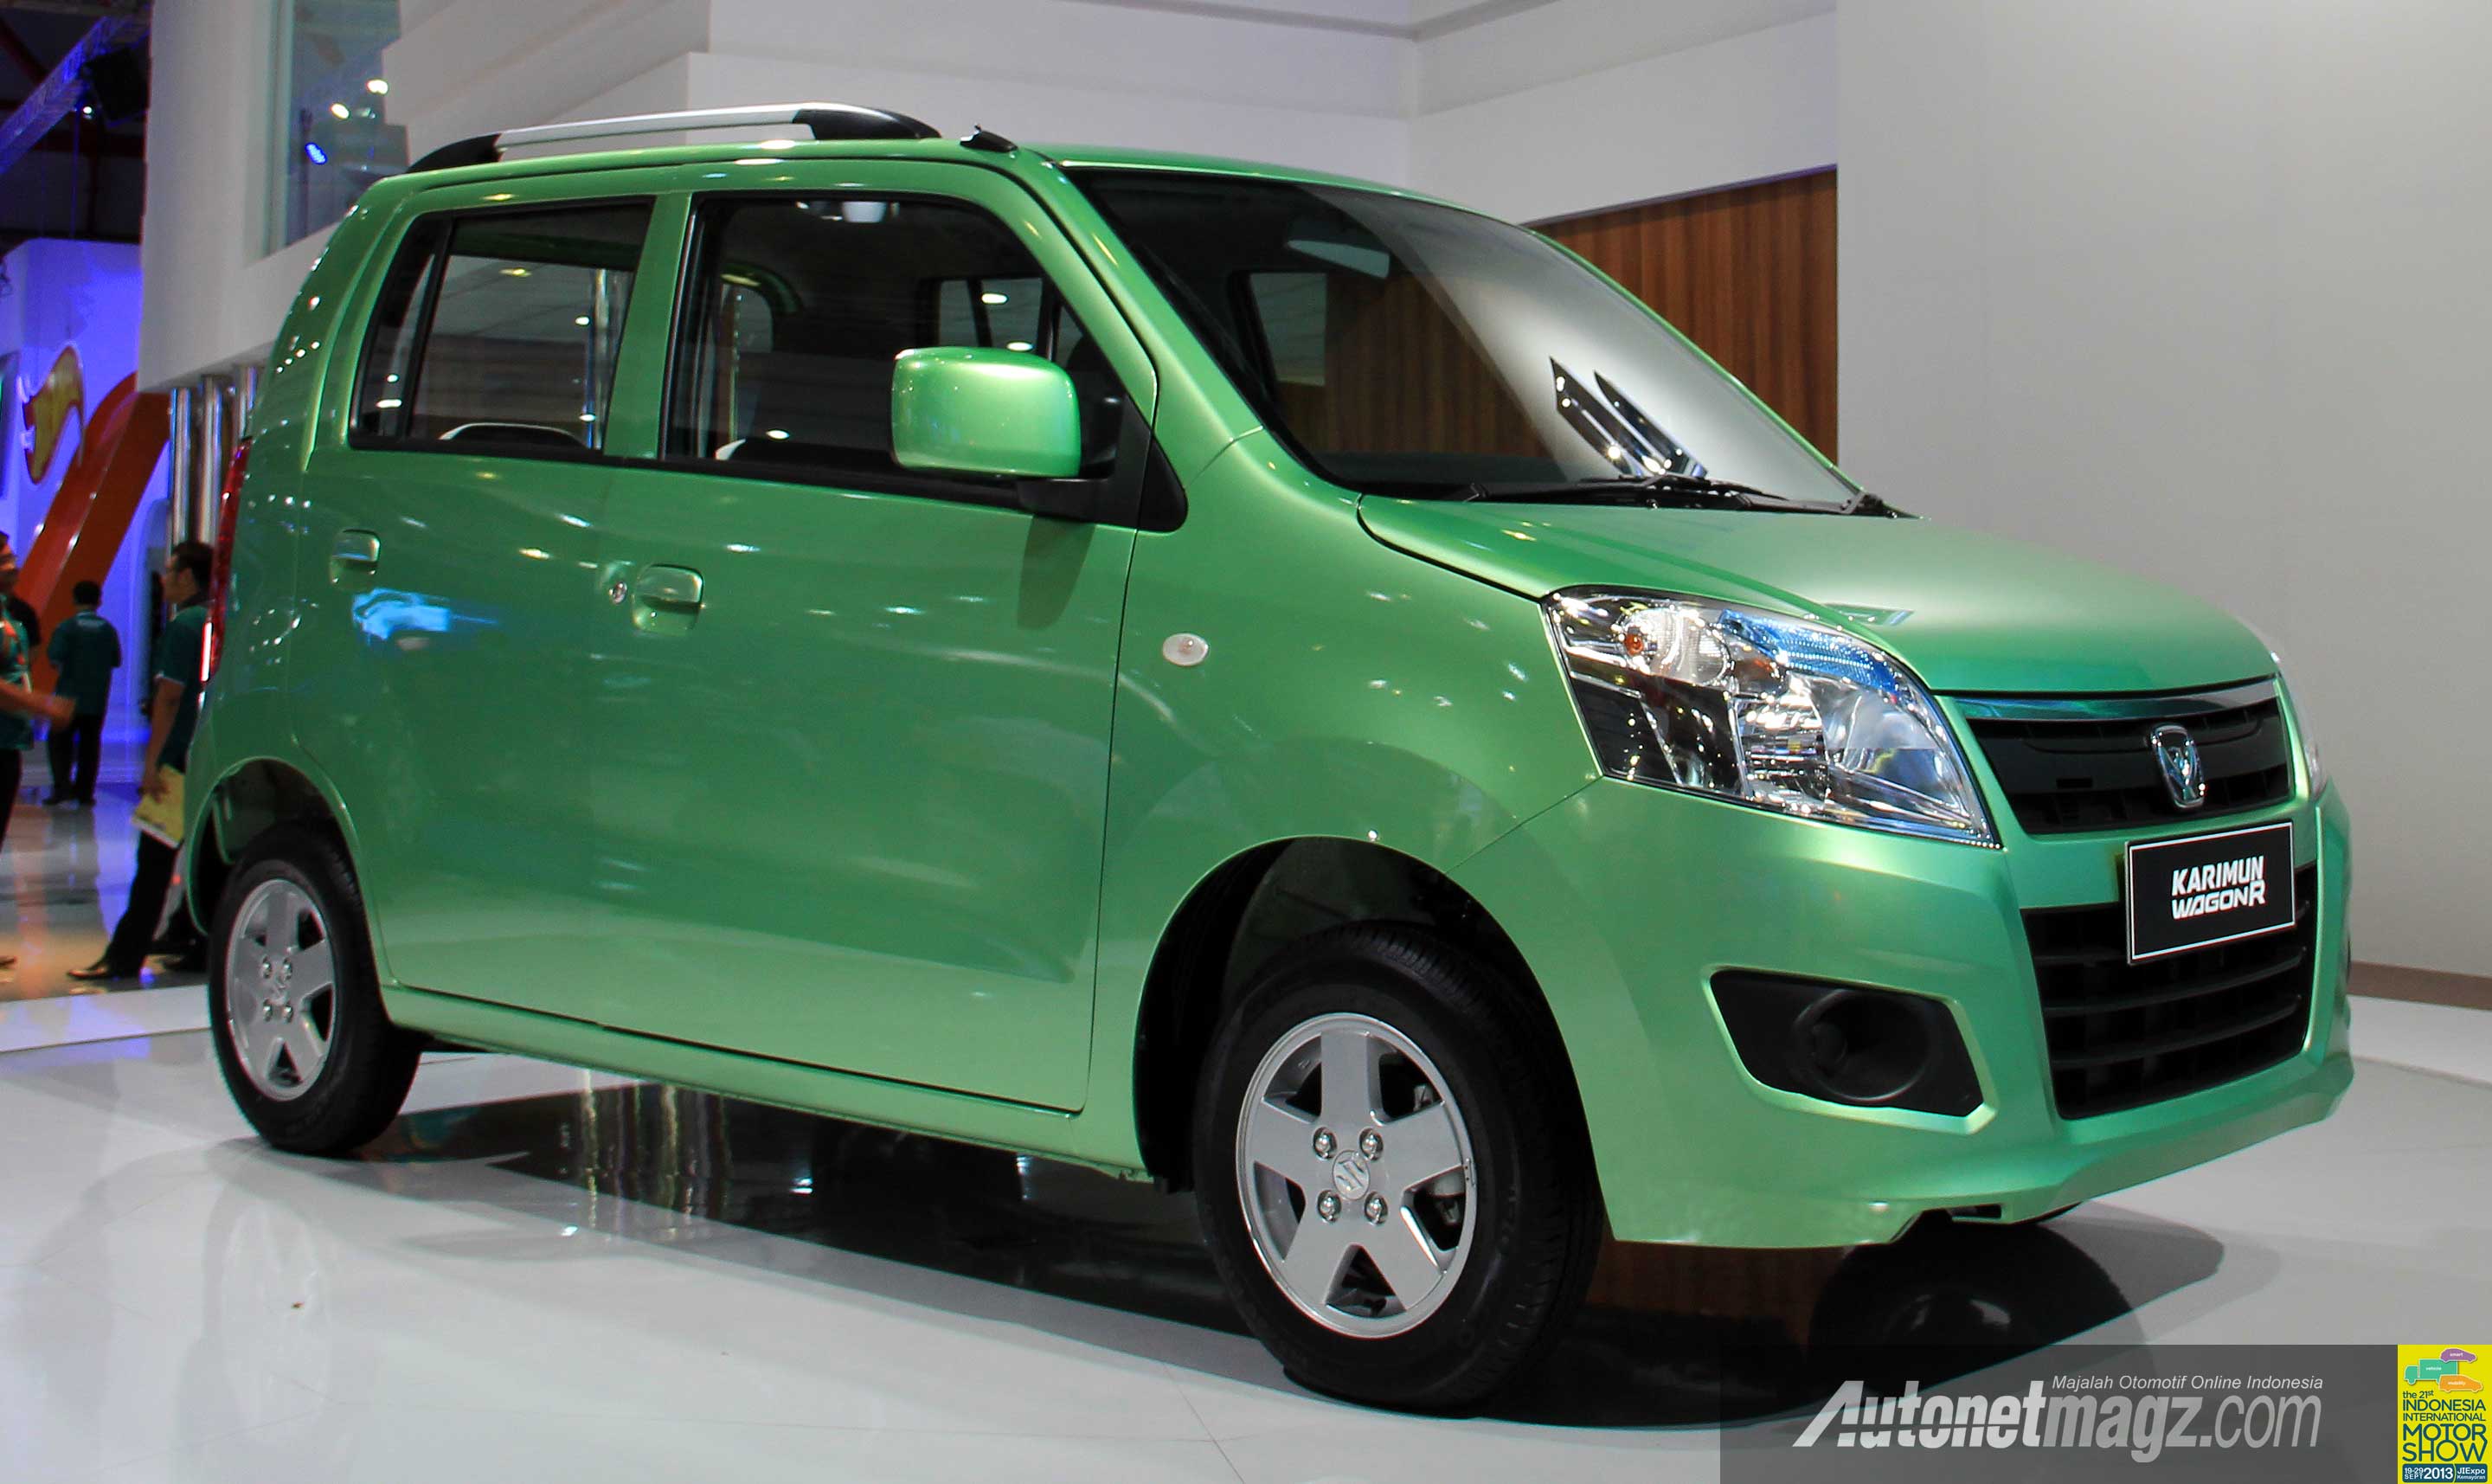 IIMS 2013, LCGC Suzuki Karimun Wagon R tipe GL: Suzuki Karimun Wagon R Diluncurkan Dalam 3 Tipe